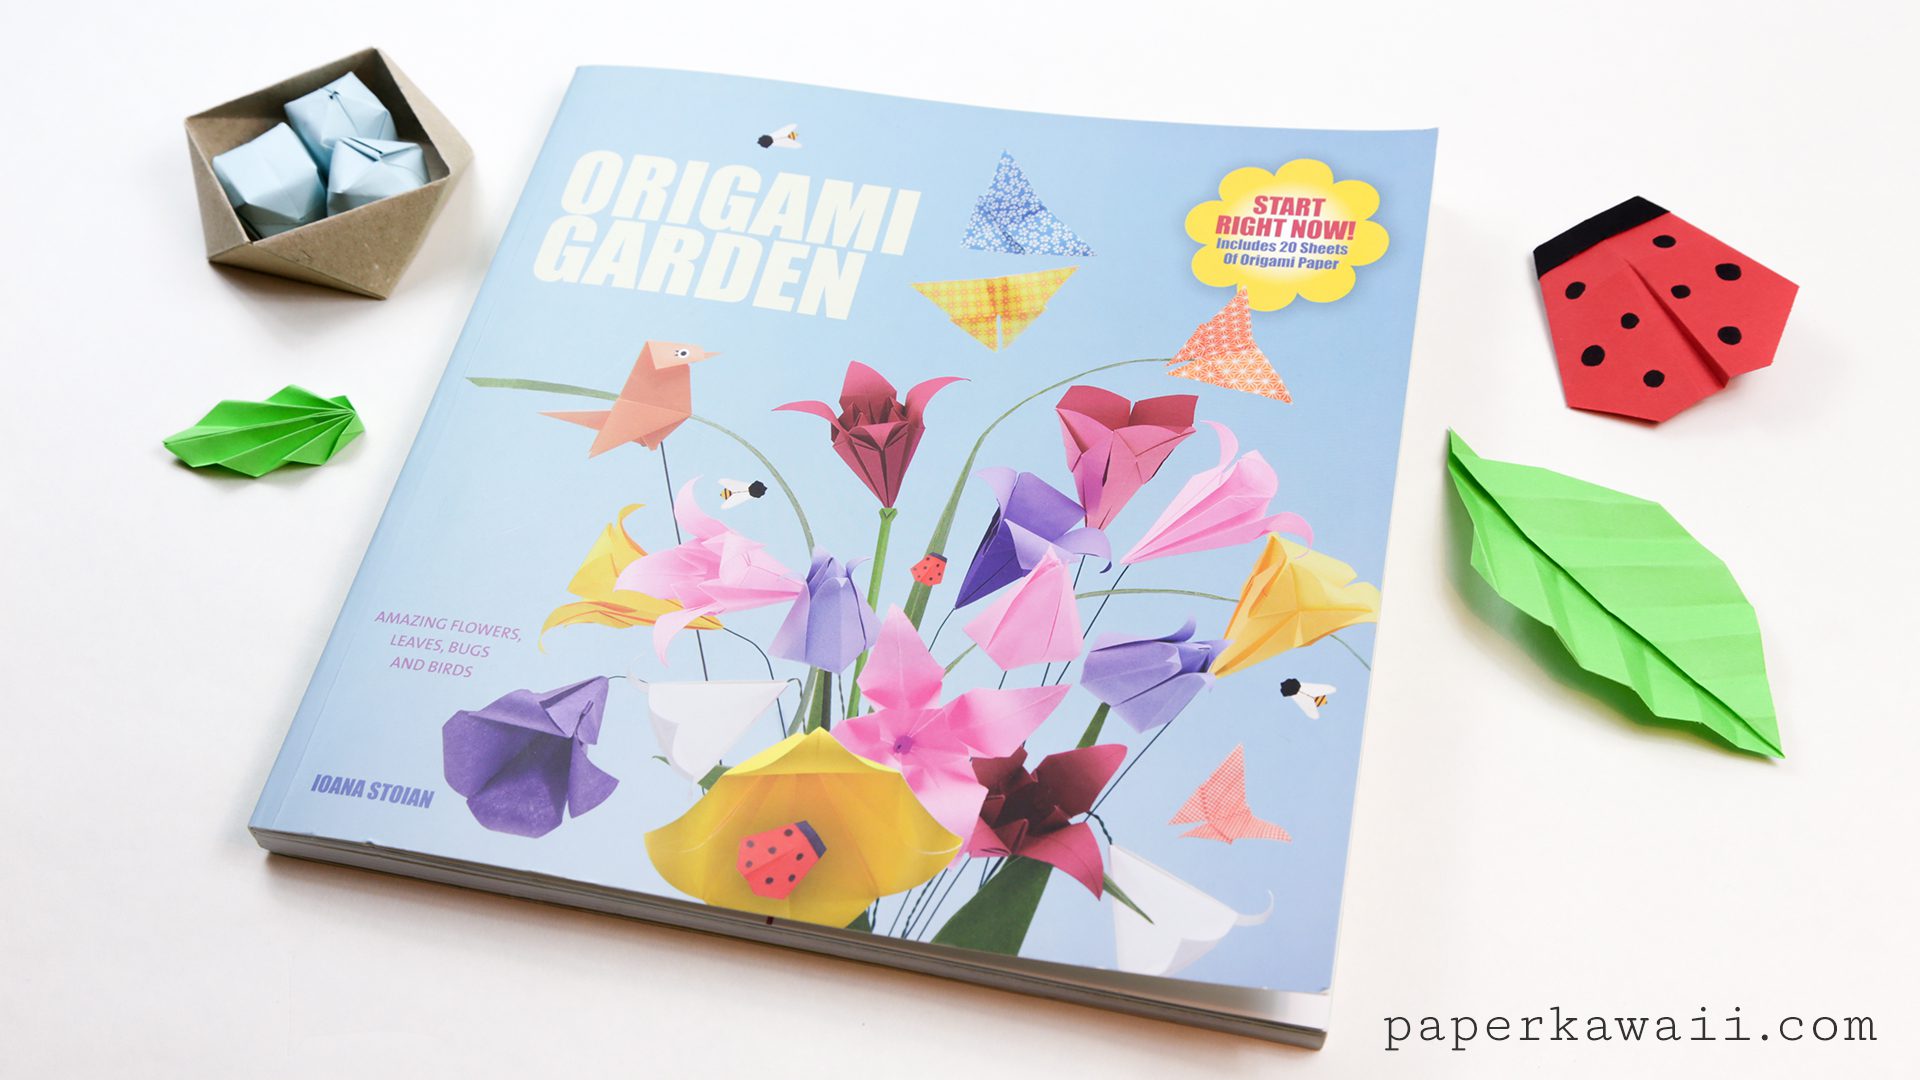 The Origami Garden Ioana Stoian Book 01